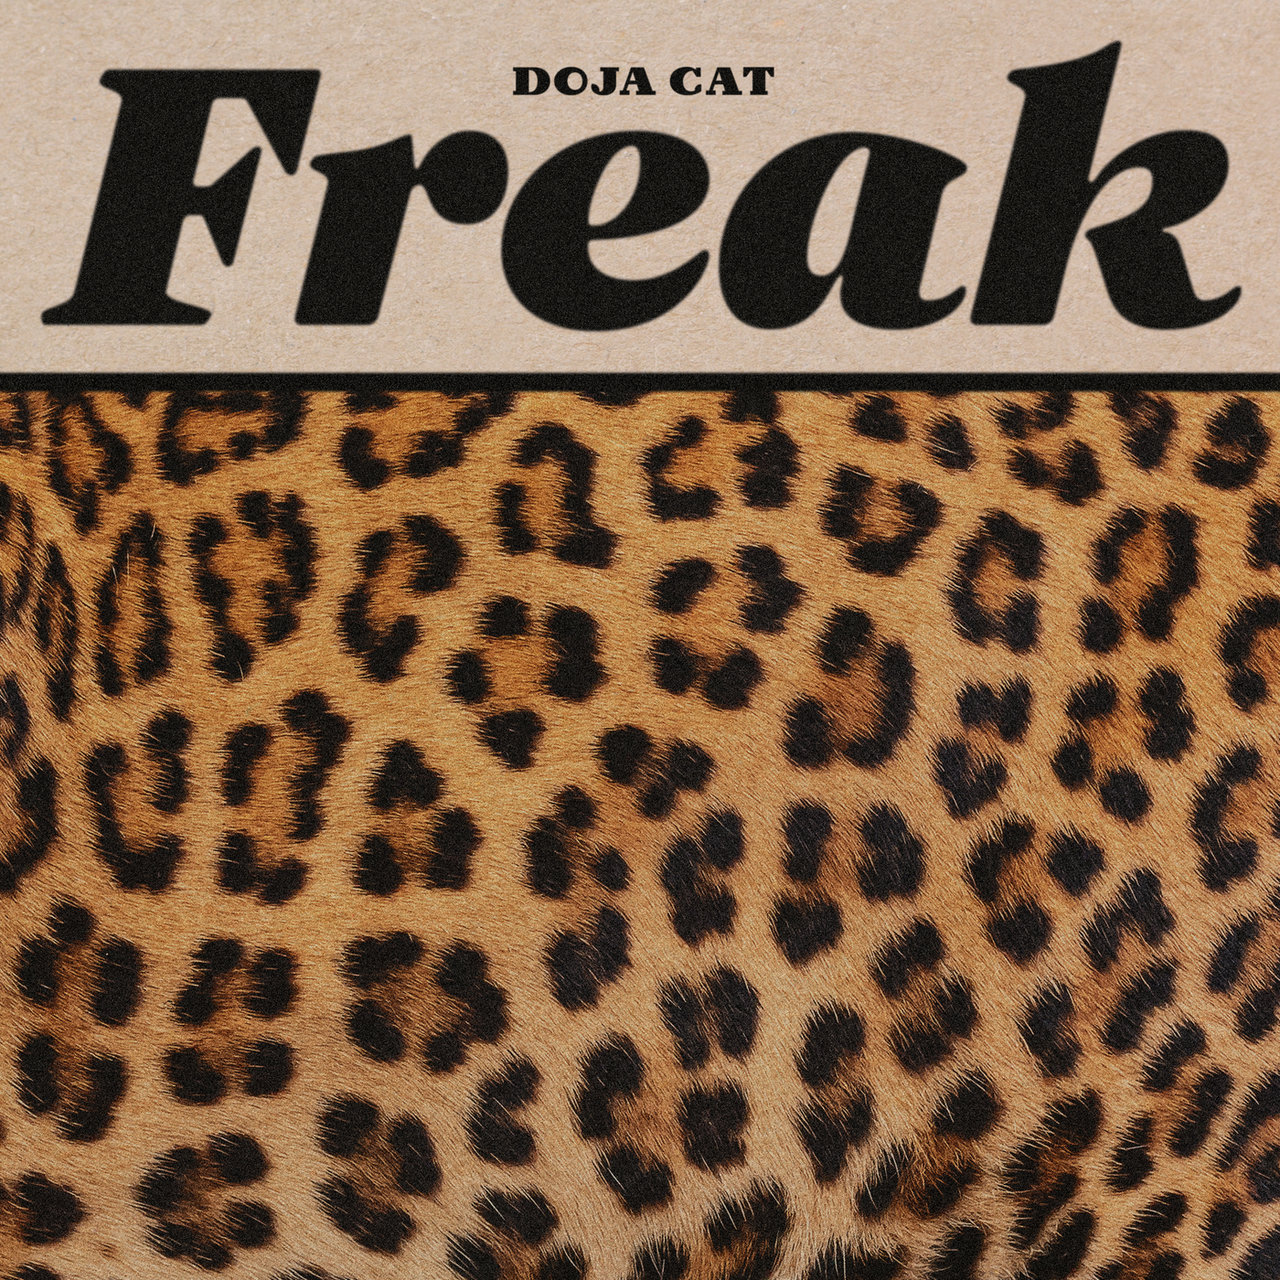 Doja Cat - Freak (Cover)